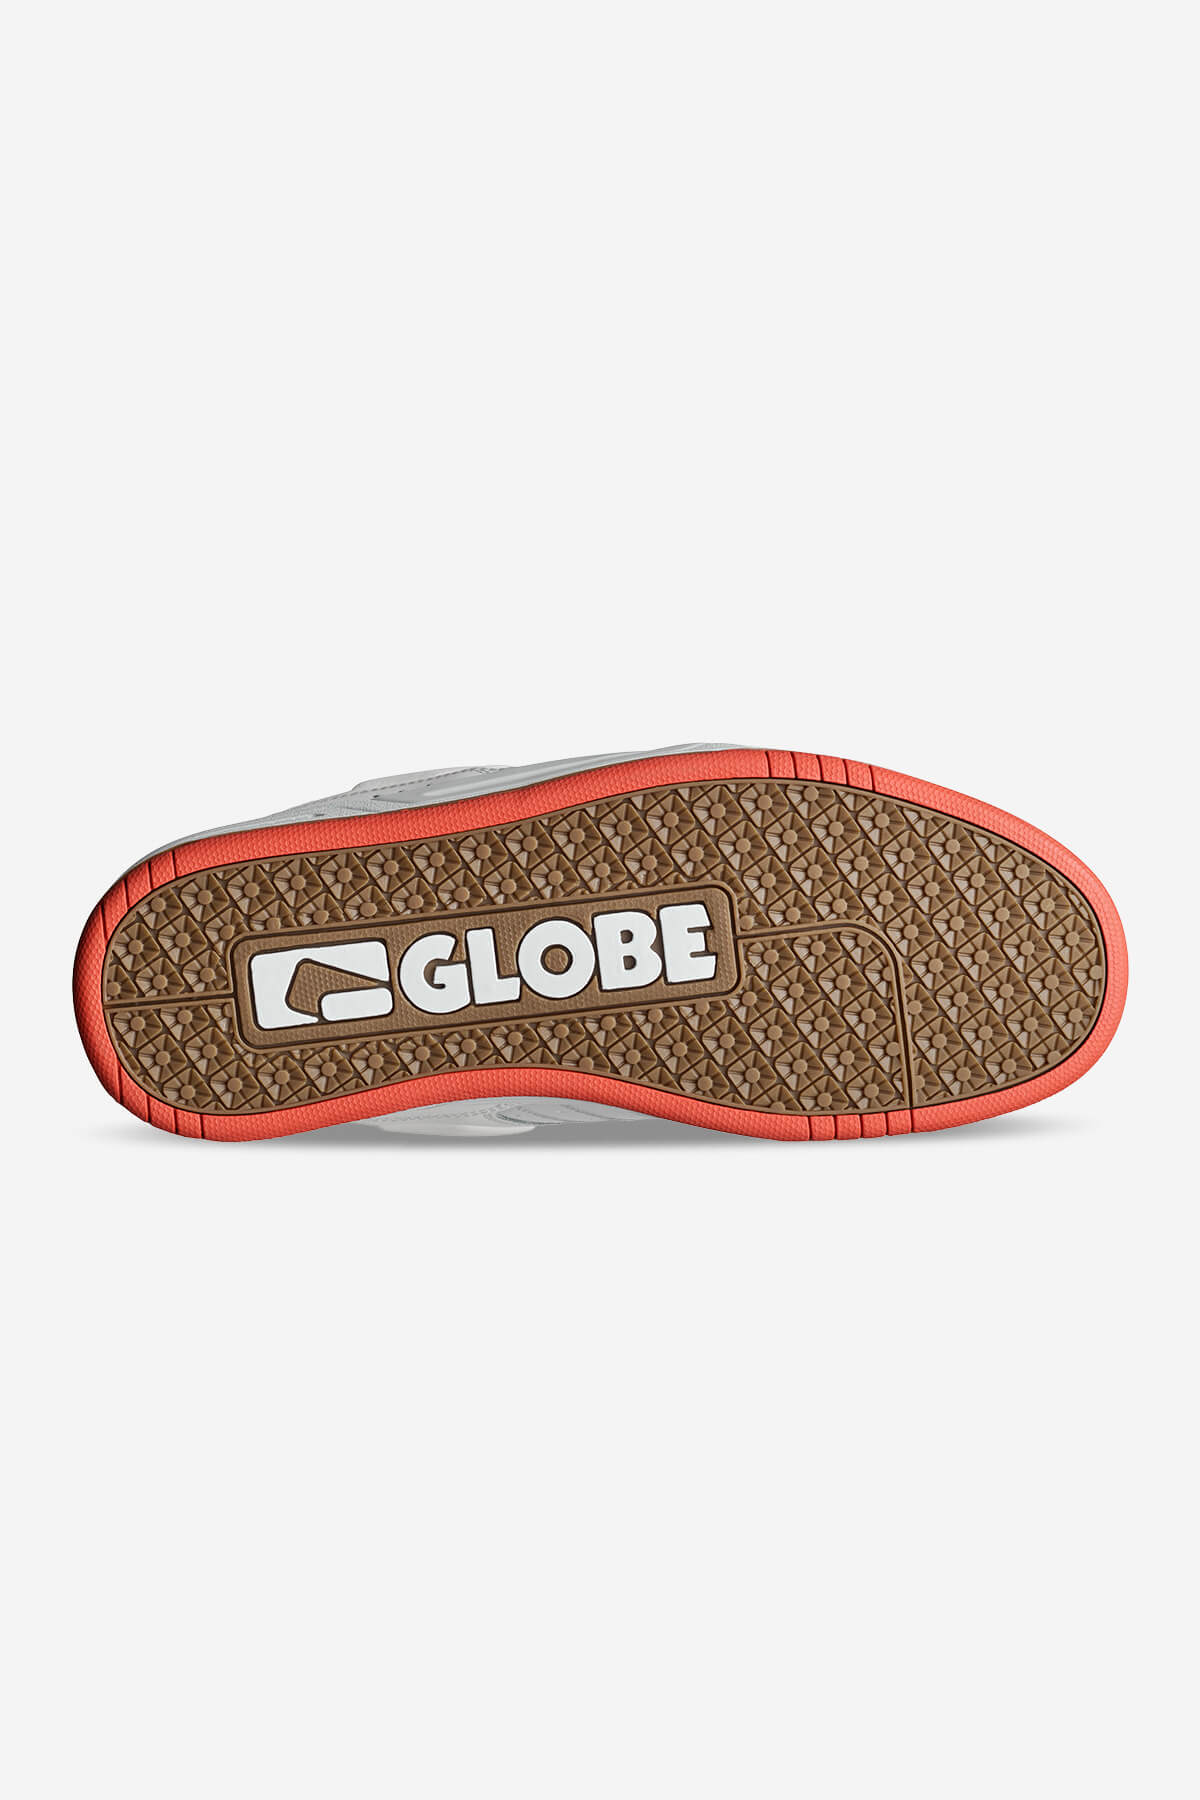 Globe - Fusion - White/Red - skateboard Scarpe